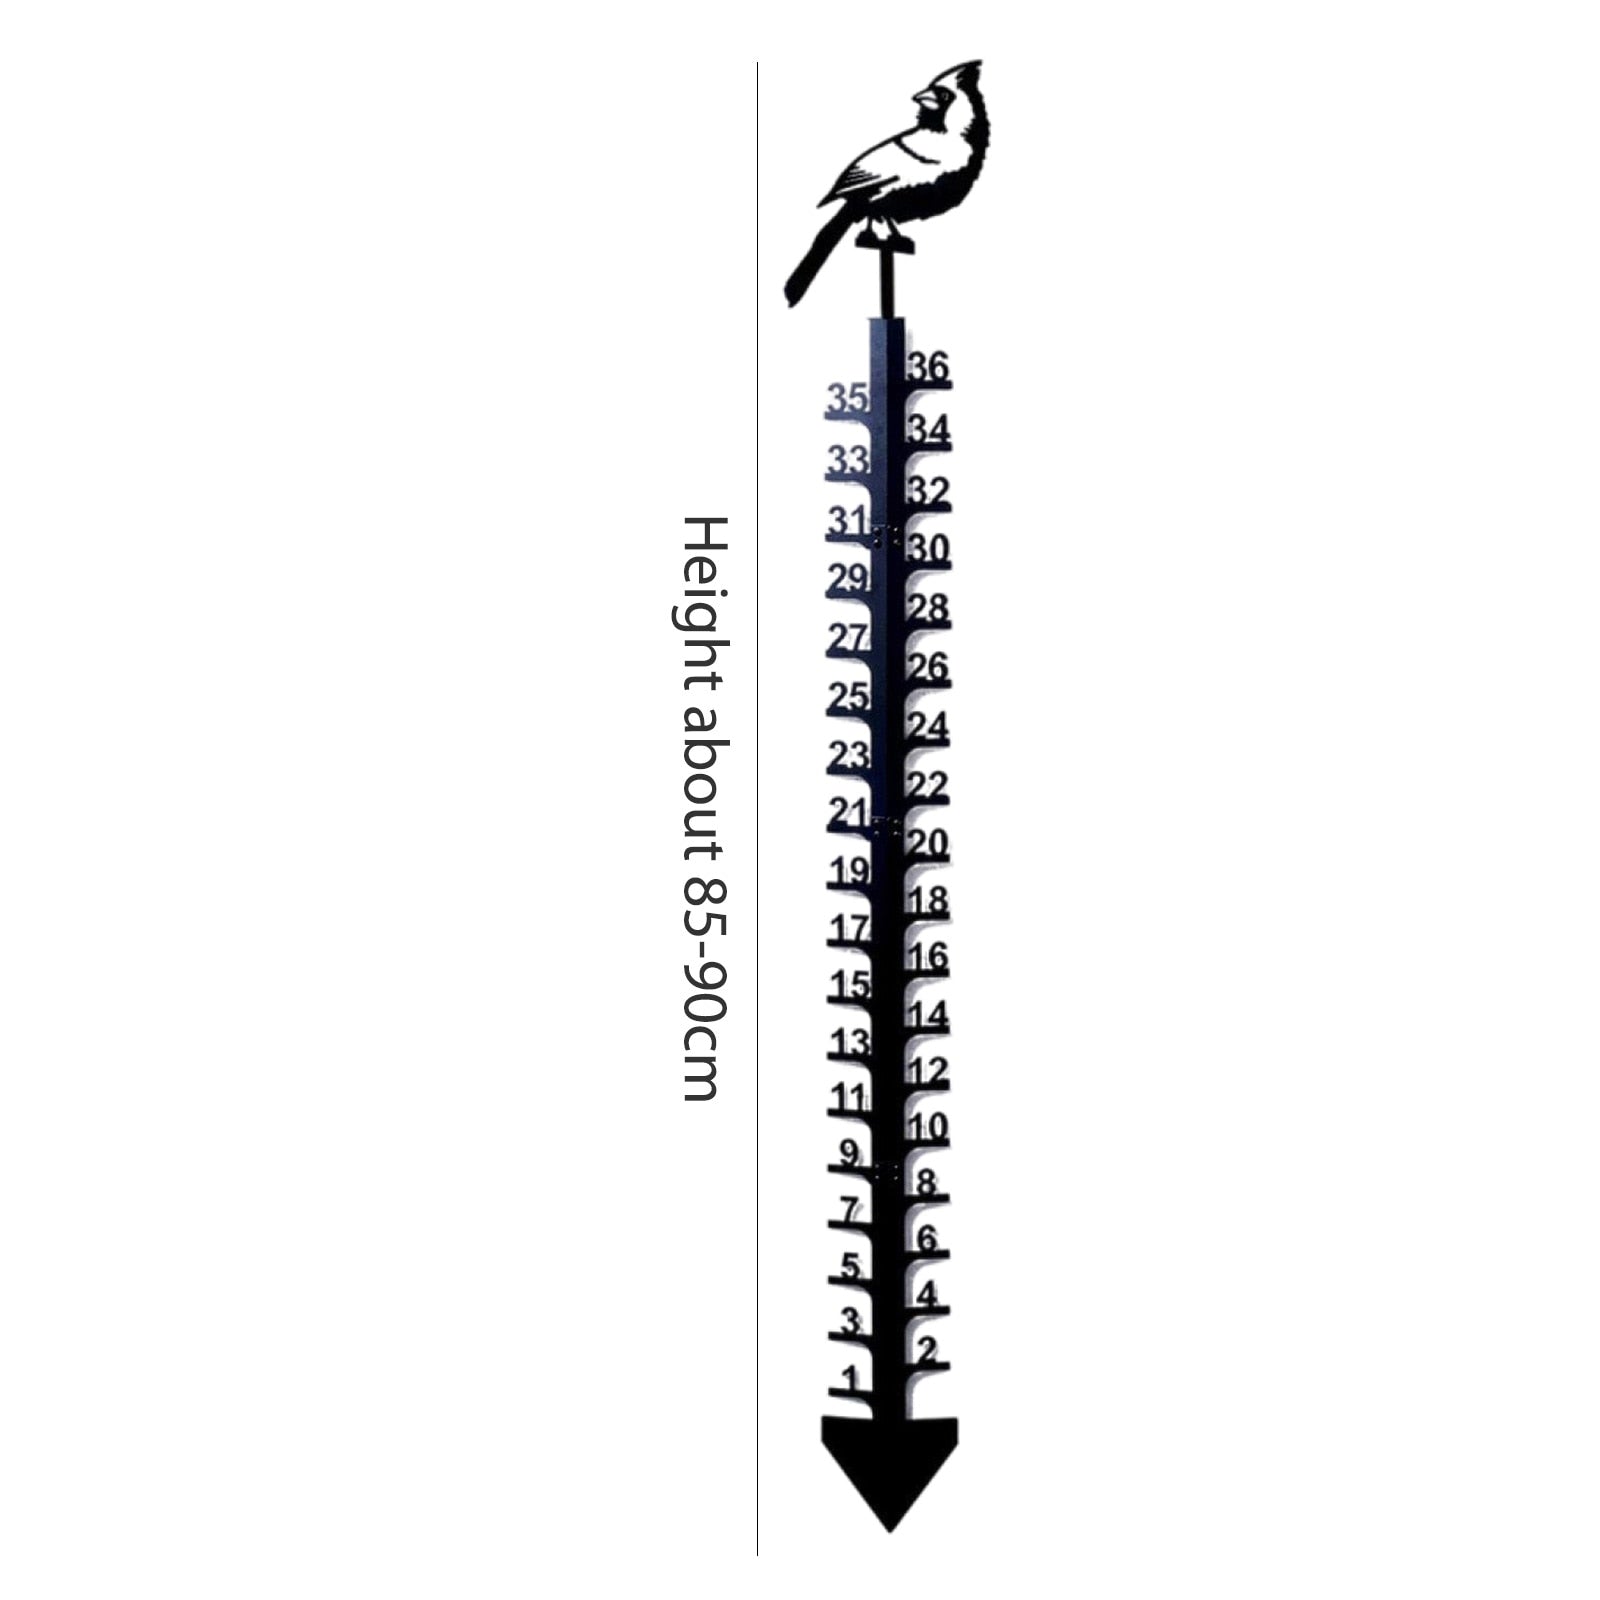 Iron Snow Measurement Device Weatherproof  Accurate Scales Garden Stakes  Yard Decor - youronestopstore23